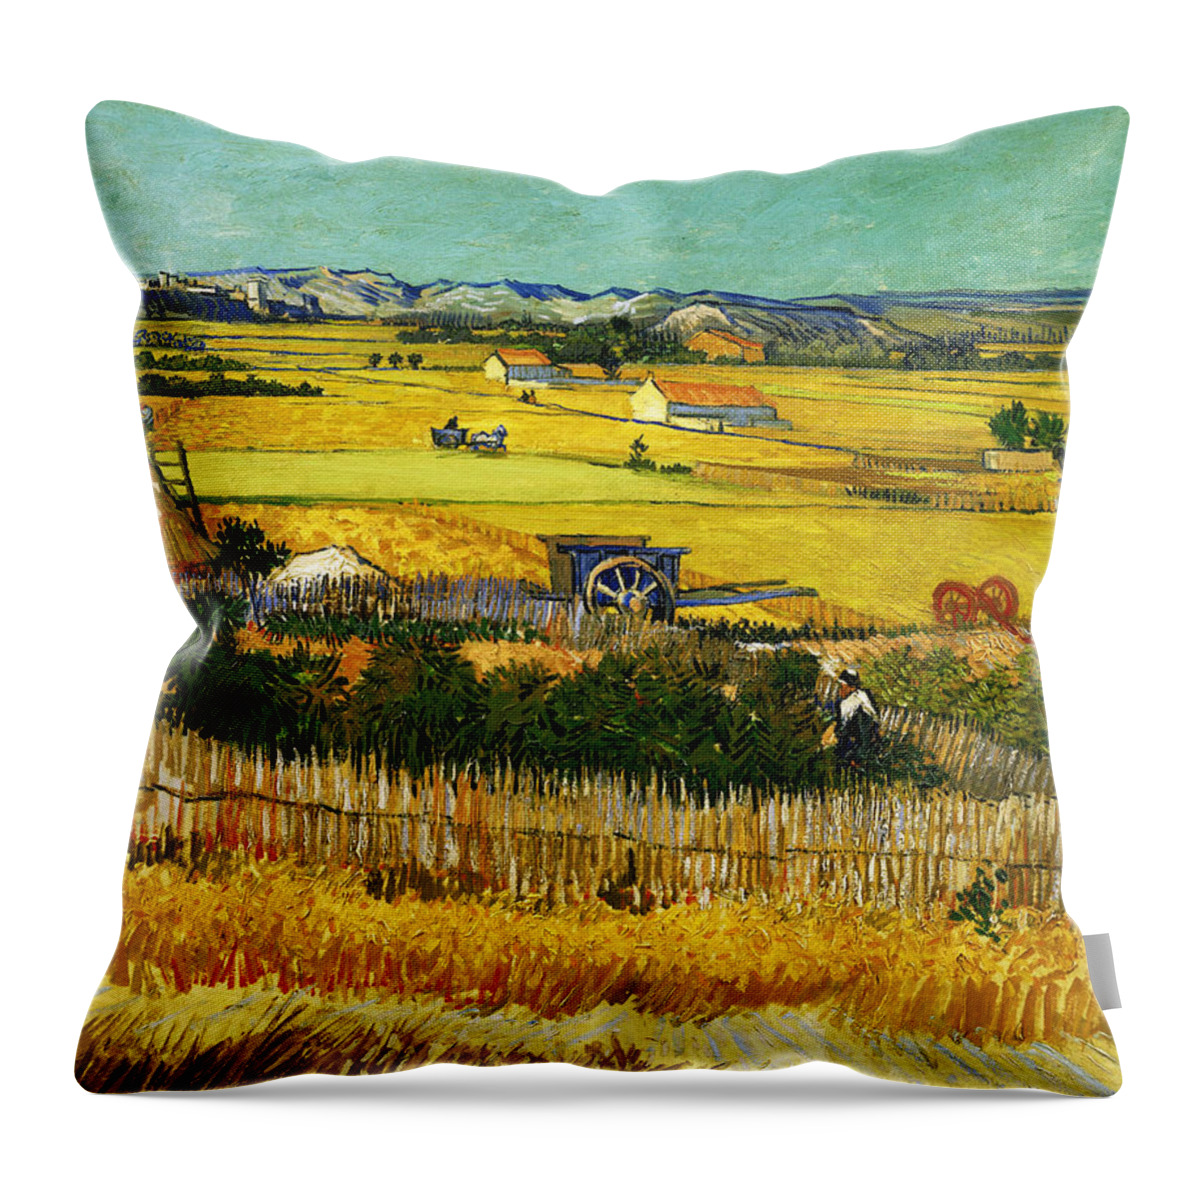 Post Modern Throw Pillow featuring the digital art Blend 17 van Gogh by David Bridburg